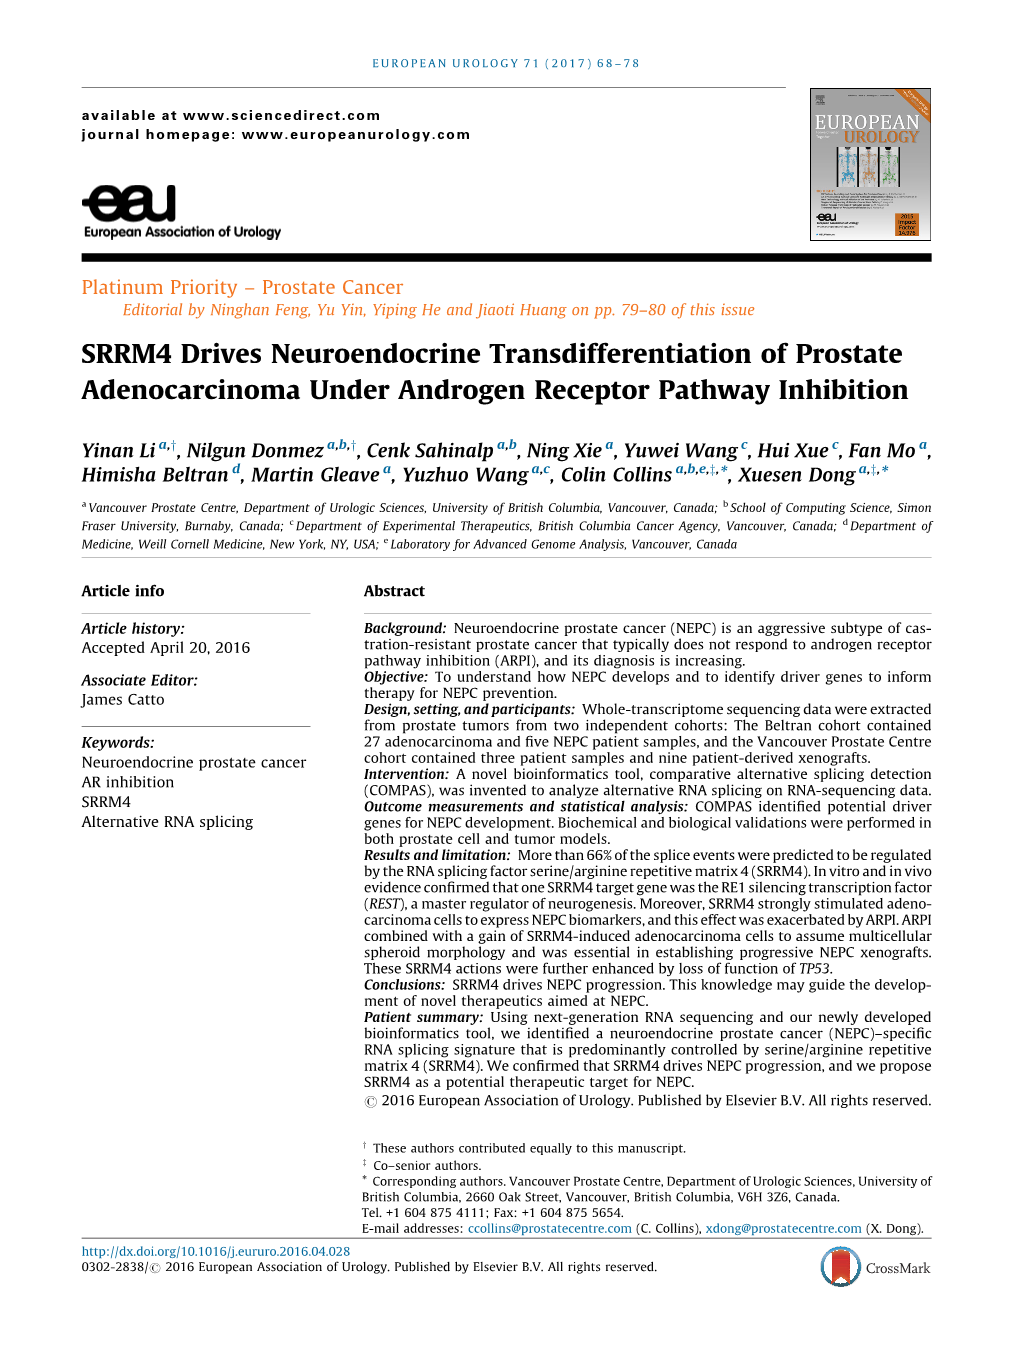 SRRM4 Drives Neuroendocrine Transdifferentiation of Prostate Adenocarcinoma Under Androgen Receptor Pathway Inhibition